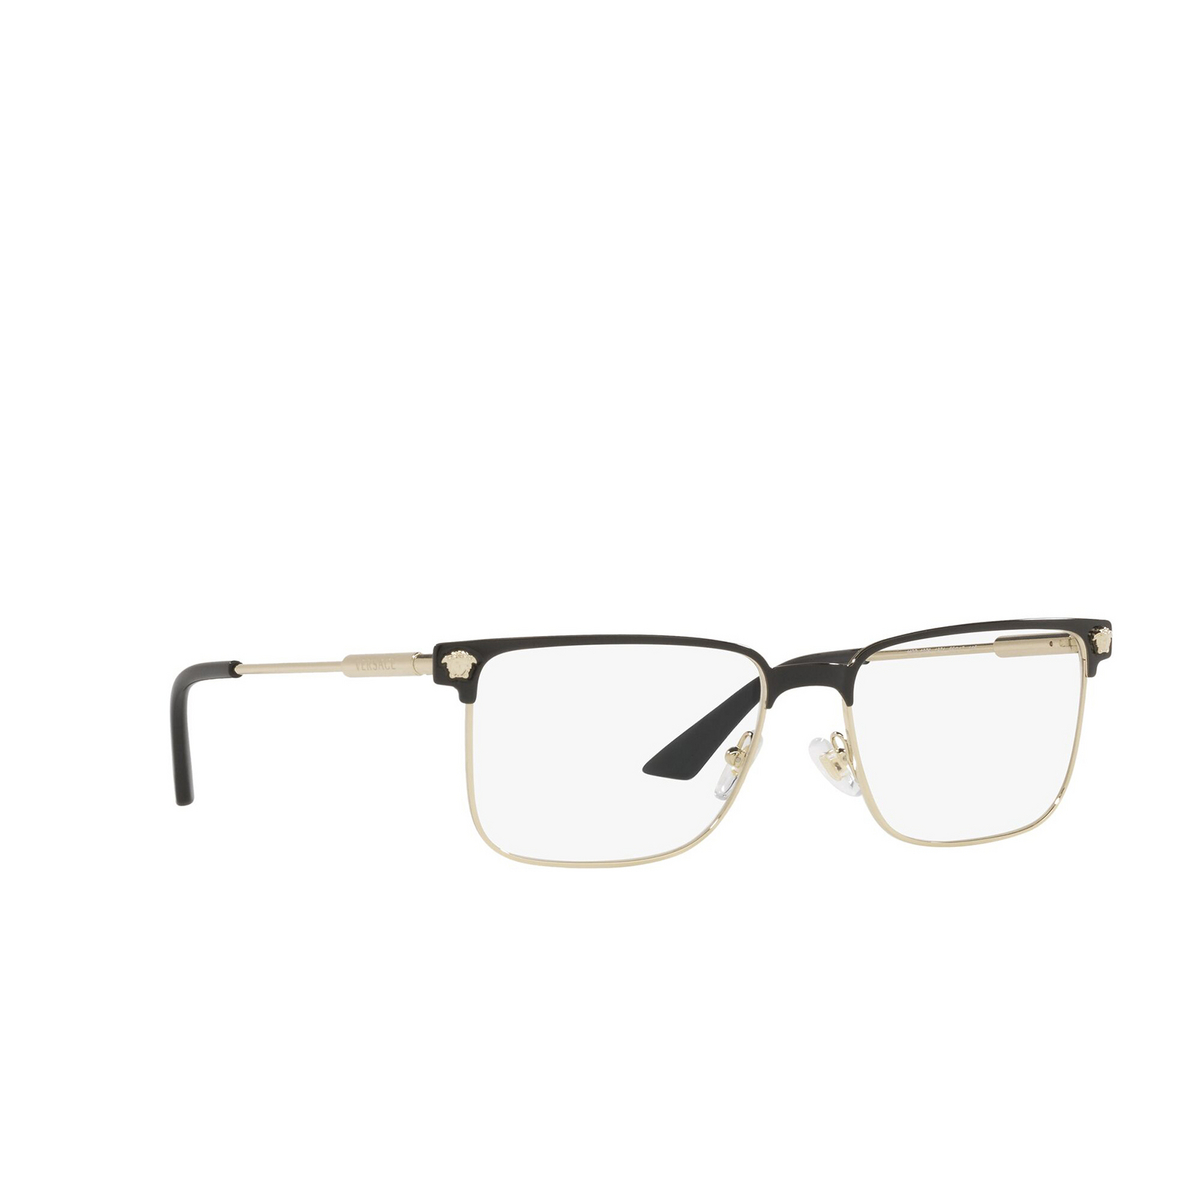 Versace® Rectangle Eyeglasses: VE1276 color Black / Pale Gold 1371 - three-quarters view.